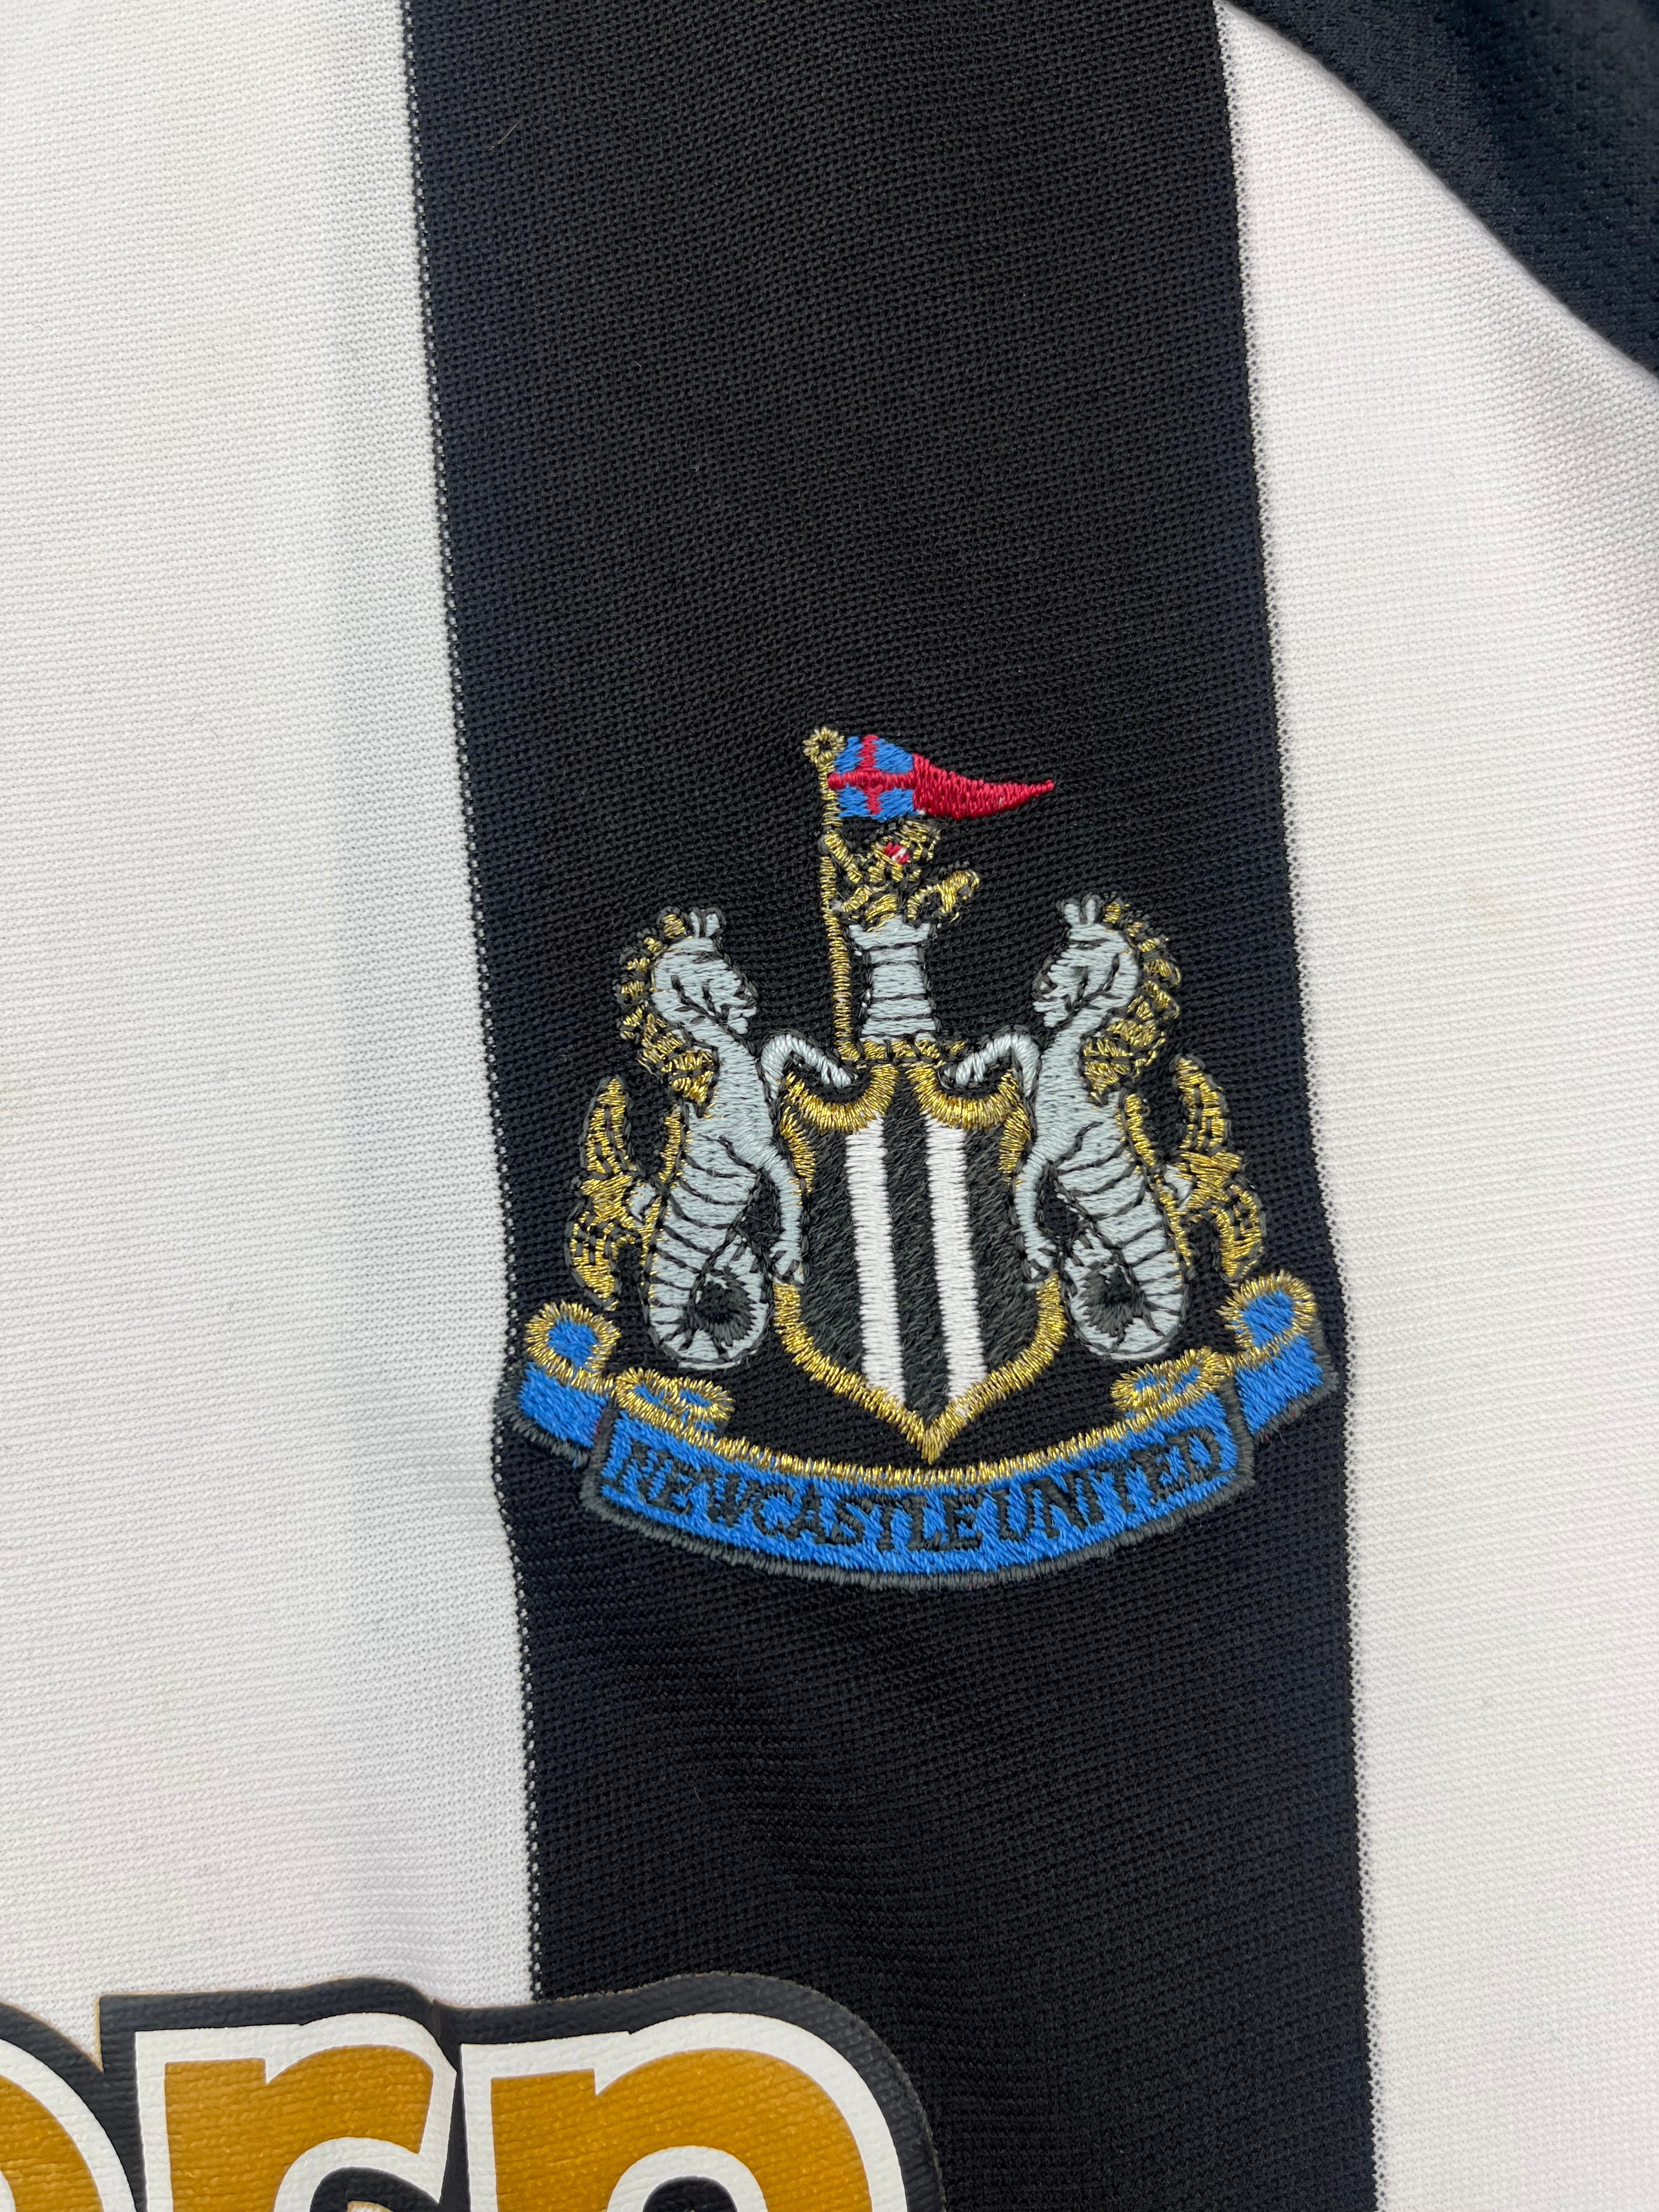 2005/07 Newcastle Home shirt (L) 9/10